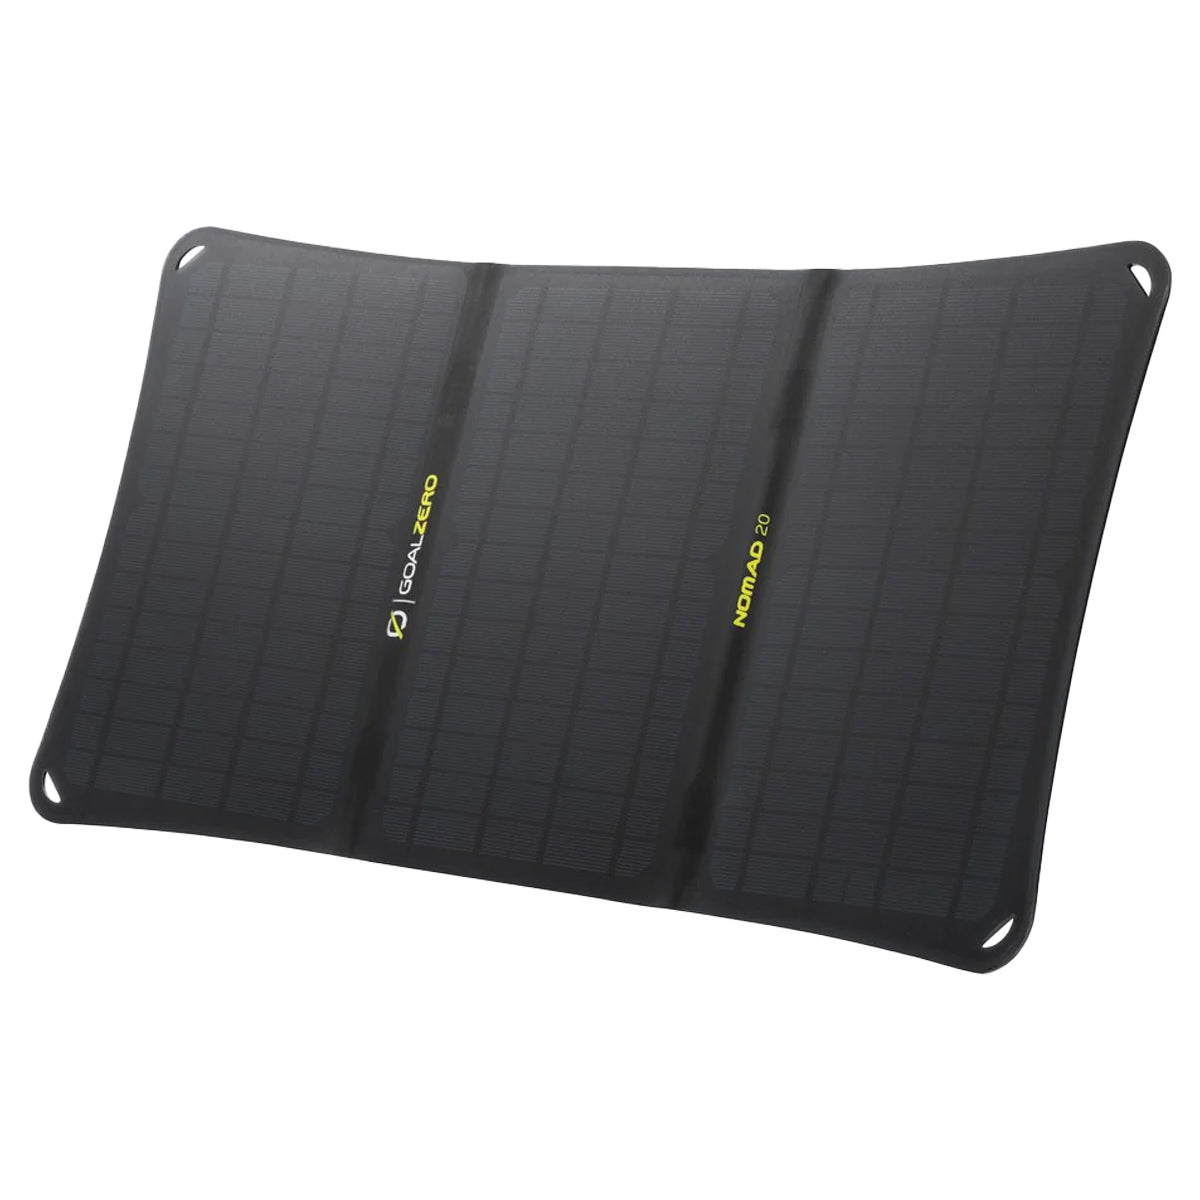 Goal Zero Nomad 20 Solar Panel in  by GOHUNT | Goal Zero - GOHUNT Shop